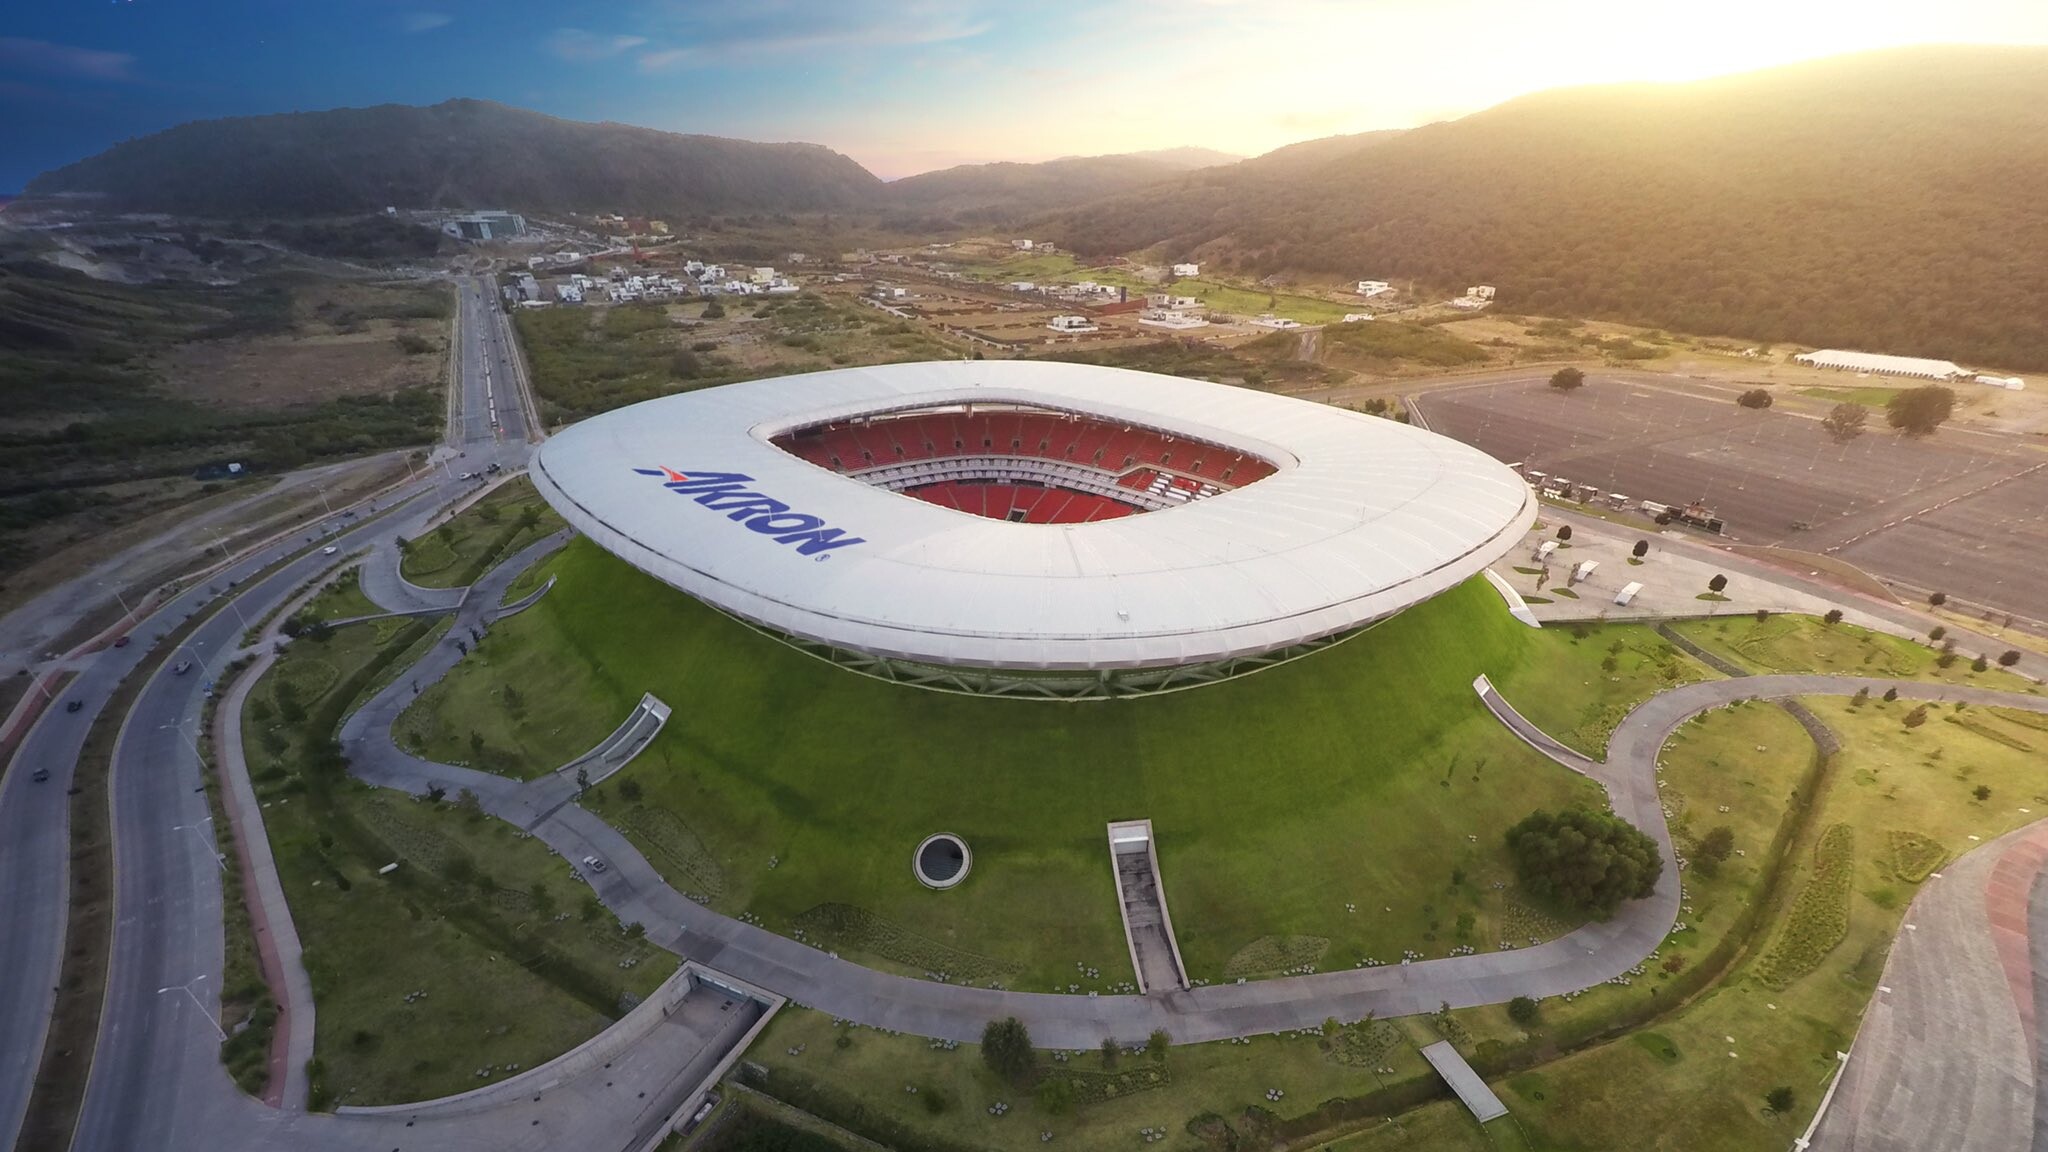 More information about "Τα υποψήφια γήπεδα που θα φιλοξενήσουν το FIFA World Cup - Μουντιάλ του 2026"